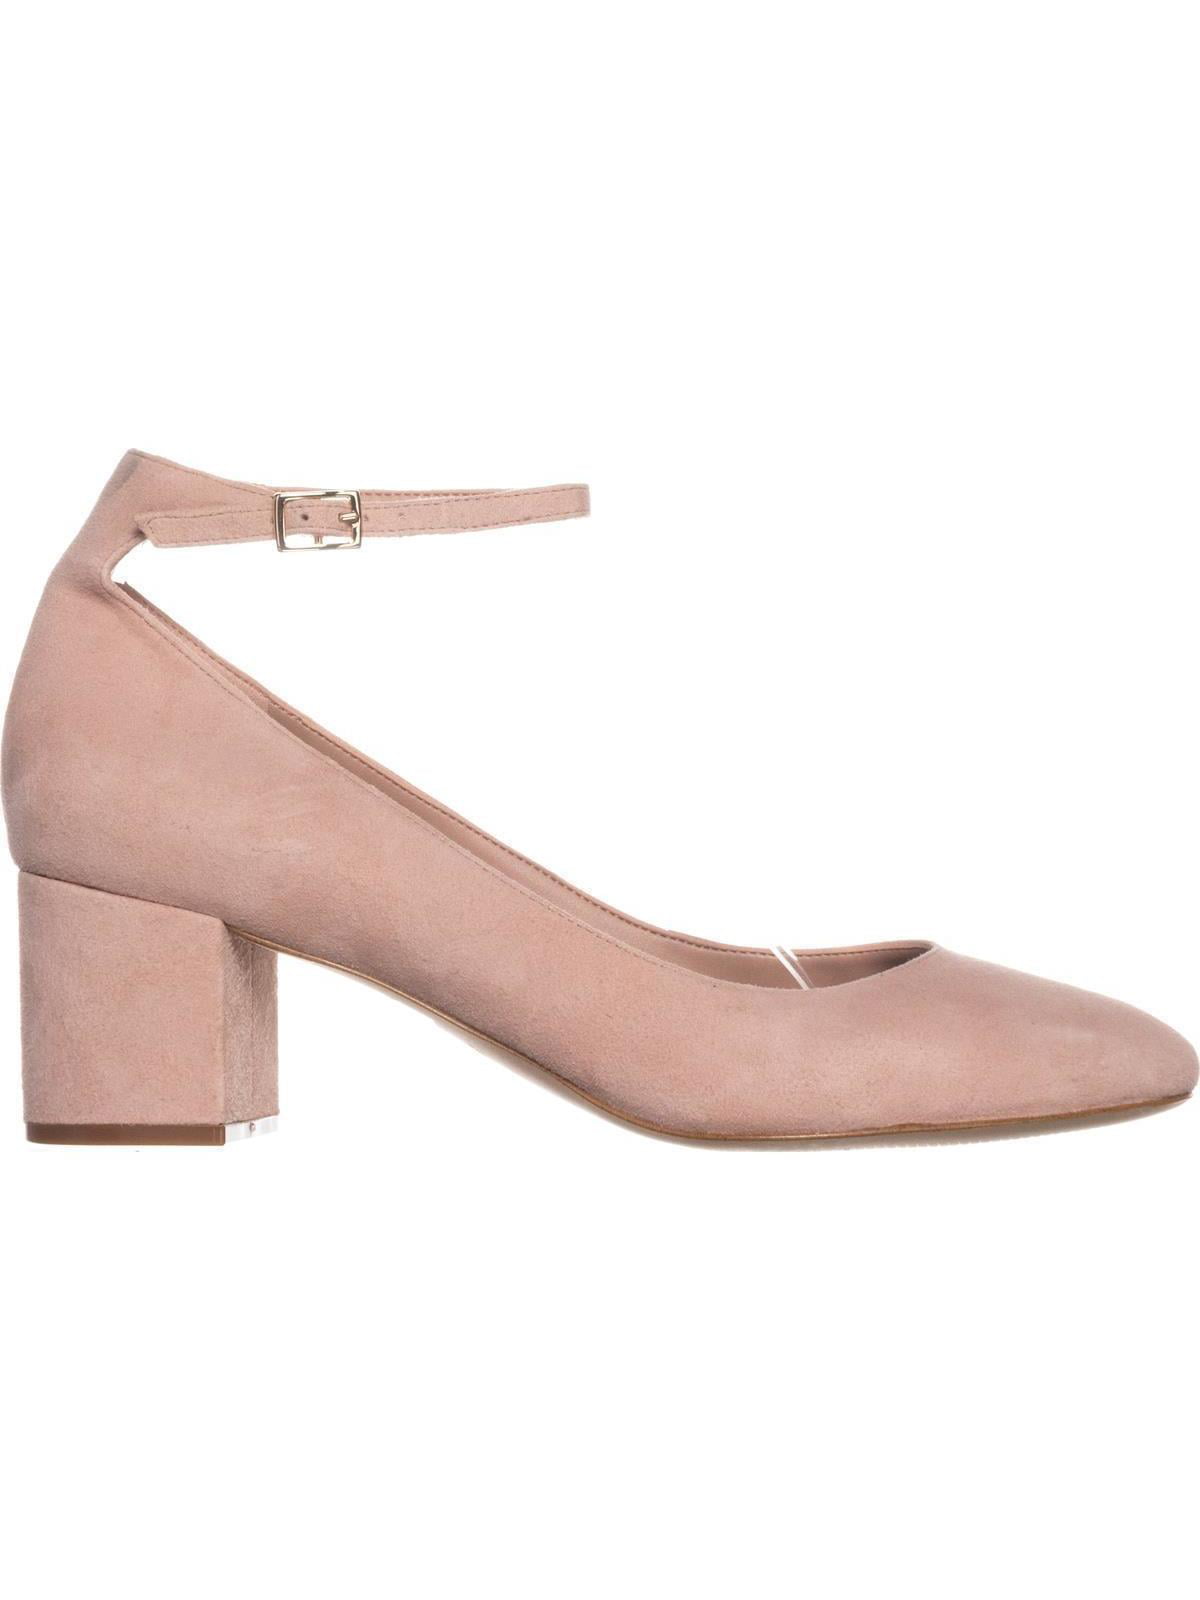 Aldo Clarisse Ankle-Strap Block Heel Pumps, Light Pink